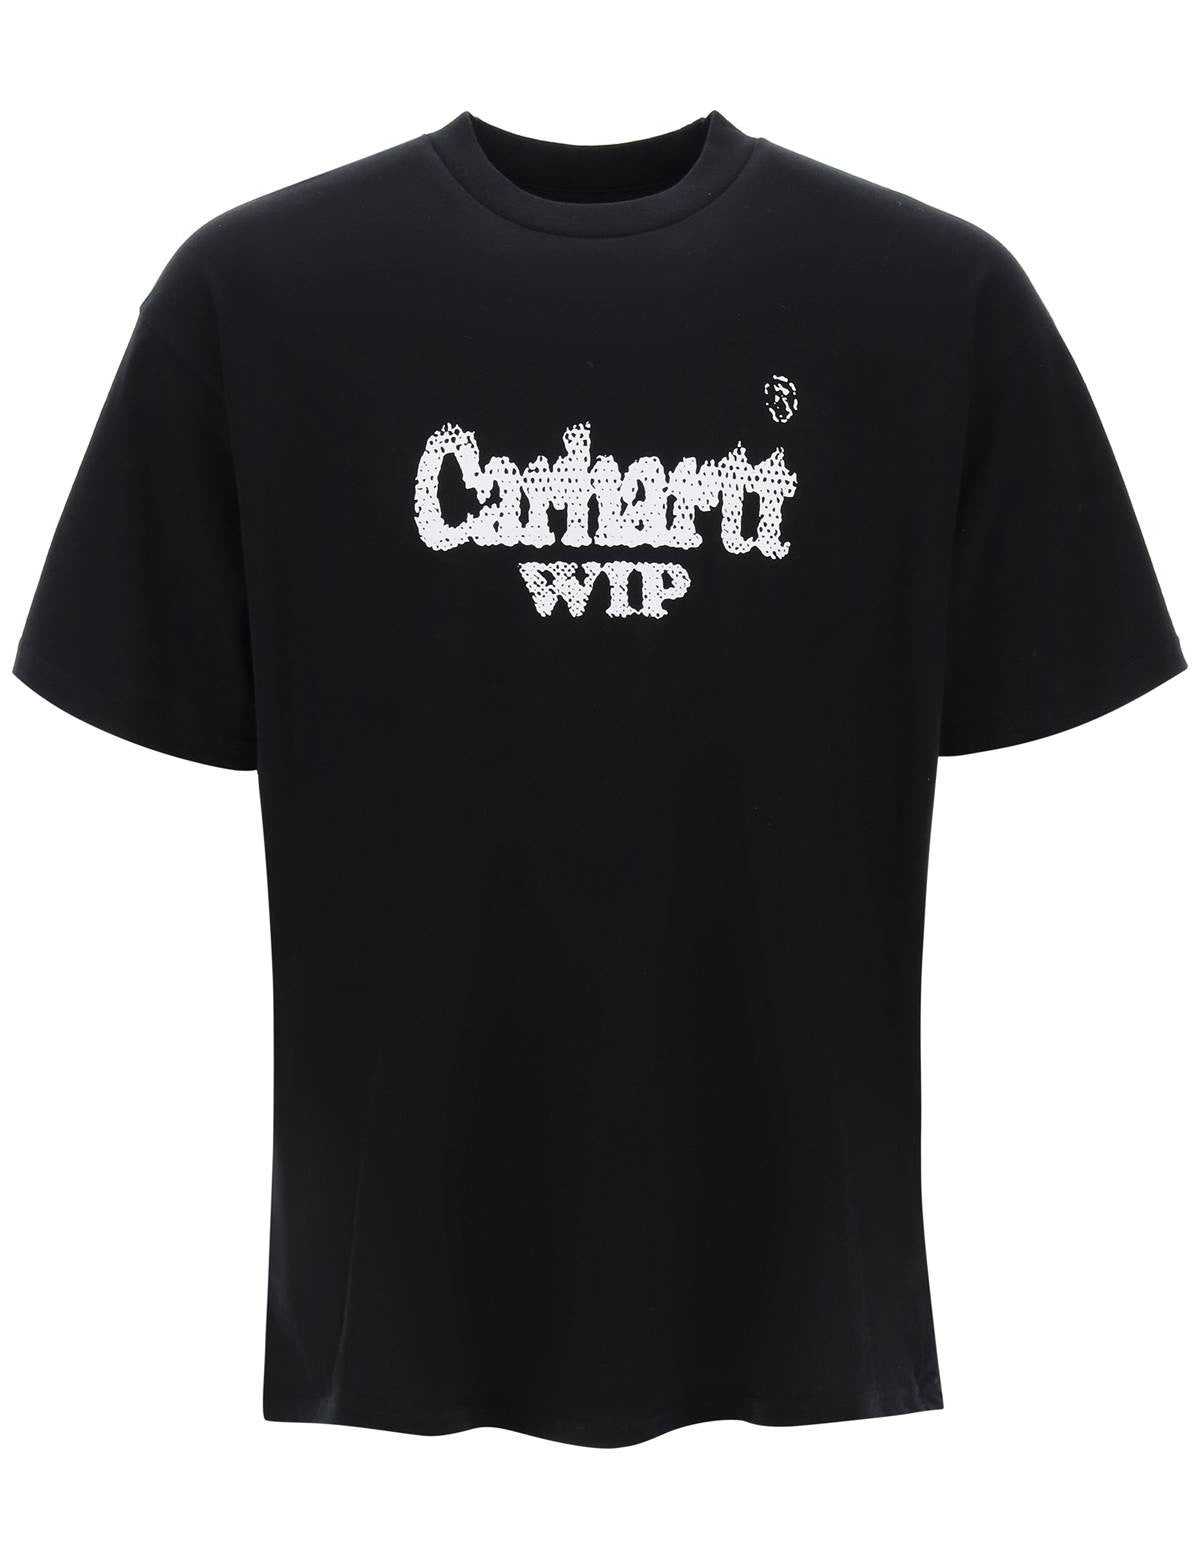 carhartt-wip-spree-halftone-printed-t-shirt.jpg